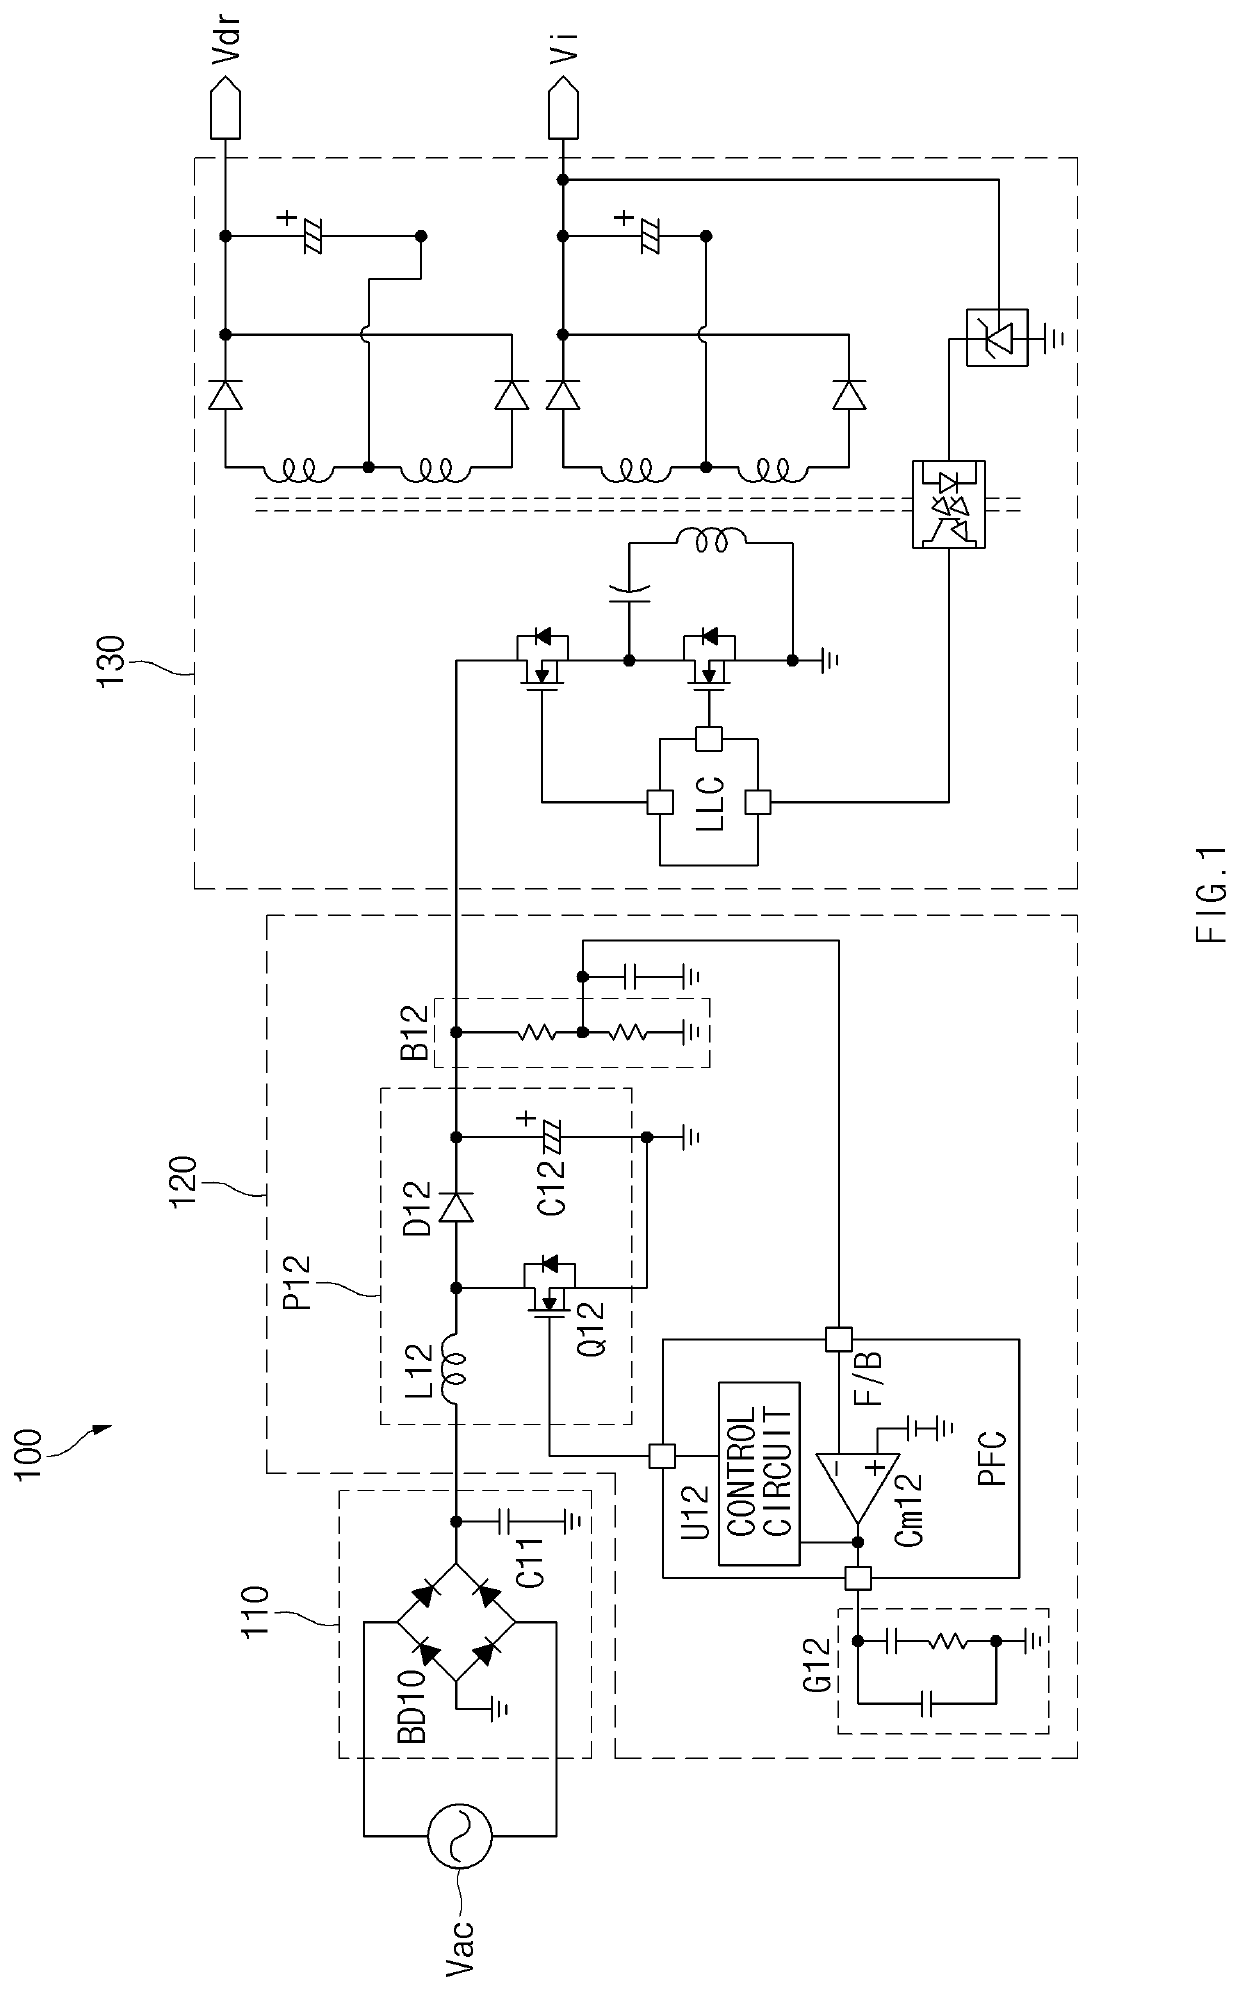 Power conversion apparatus and ac-dc conversion apparatus